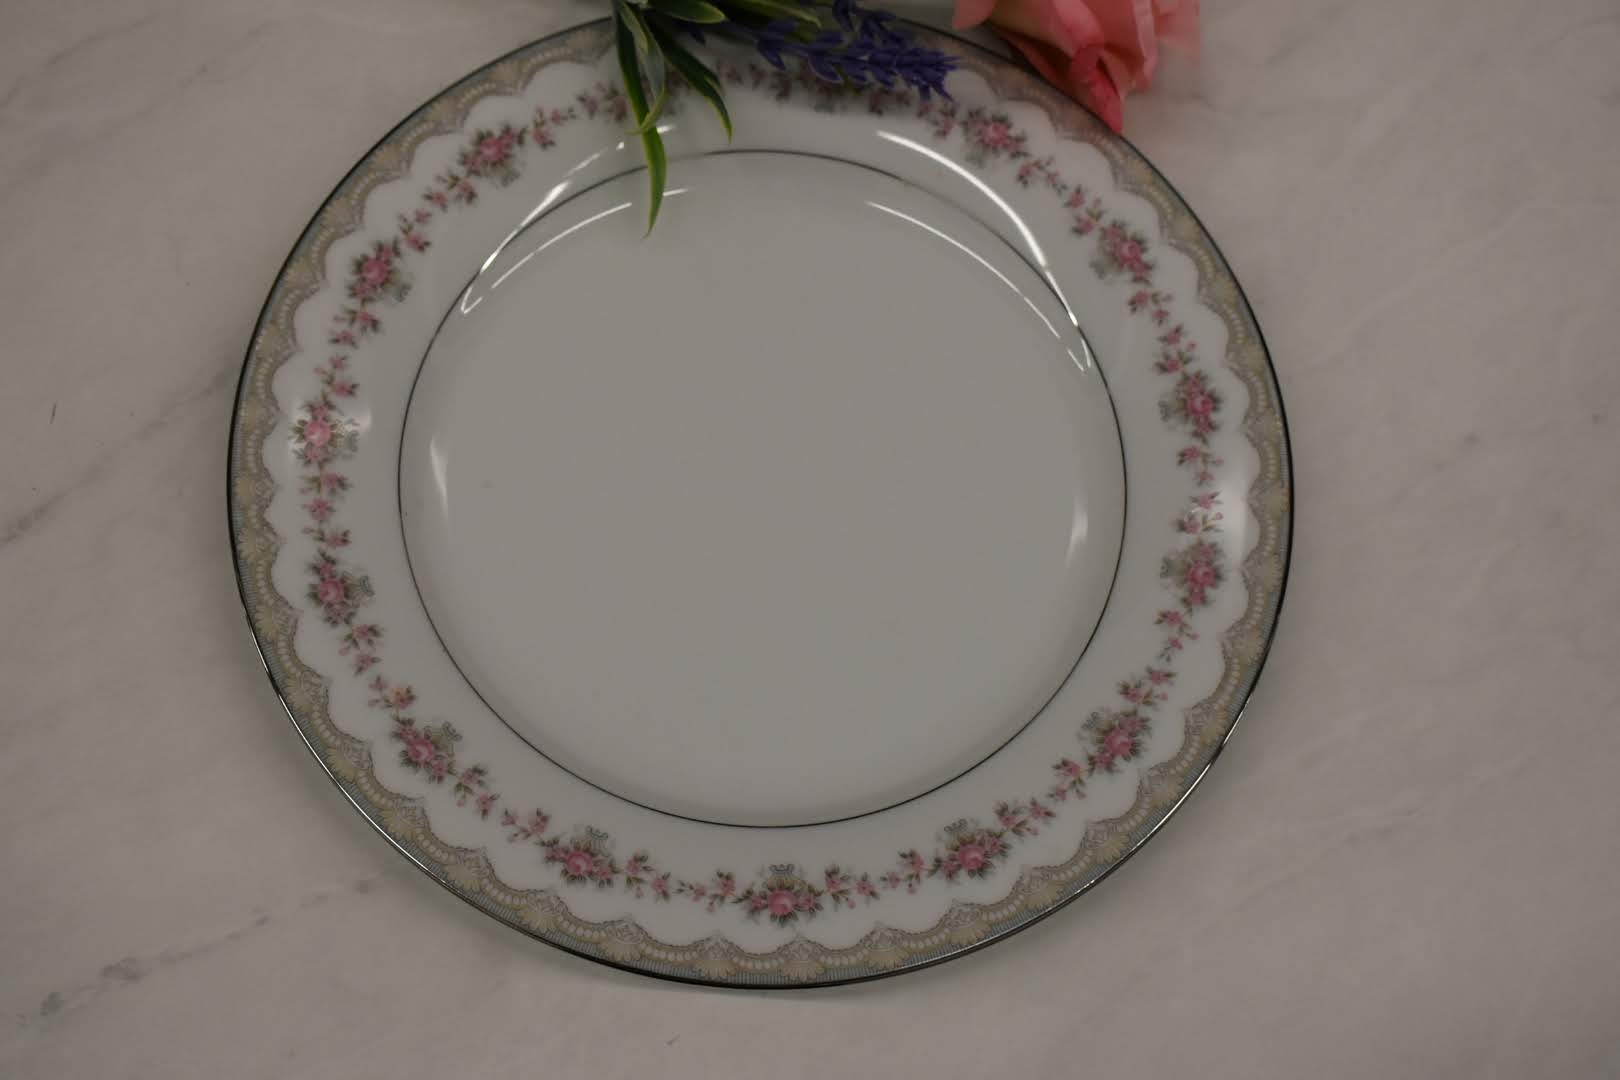 Noritake Glenwood - Fine Porcelain China - Platinum Rim - 5770 pattern - Plate Platter